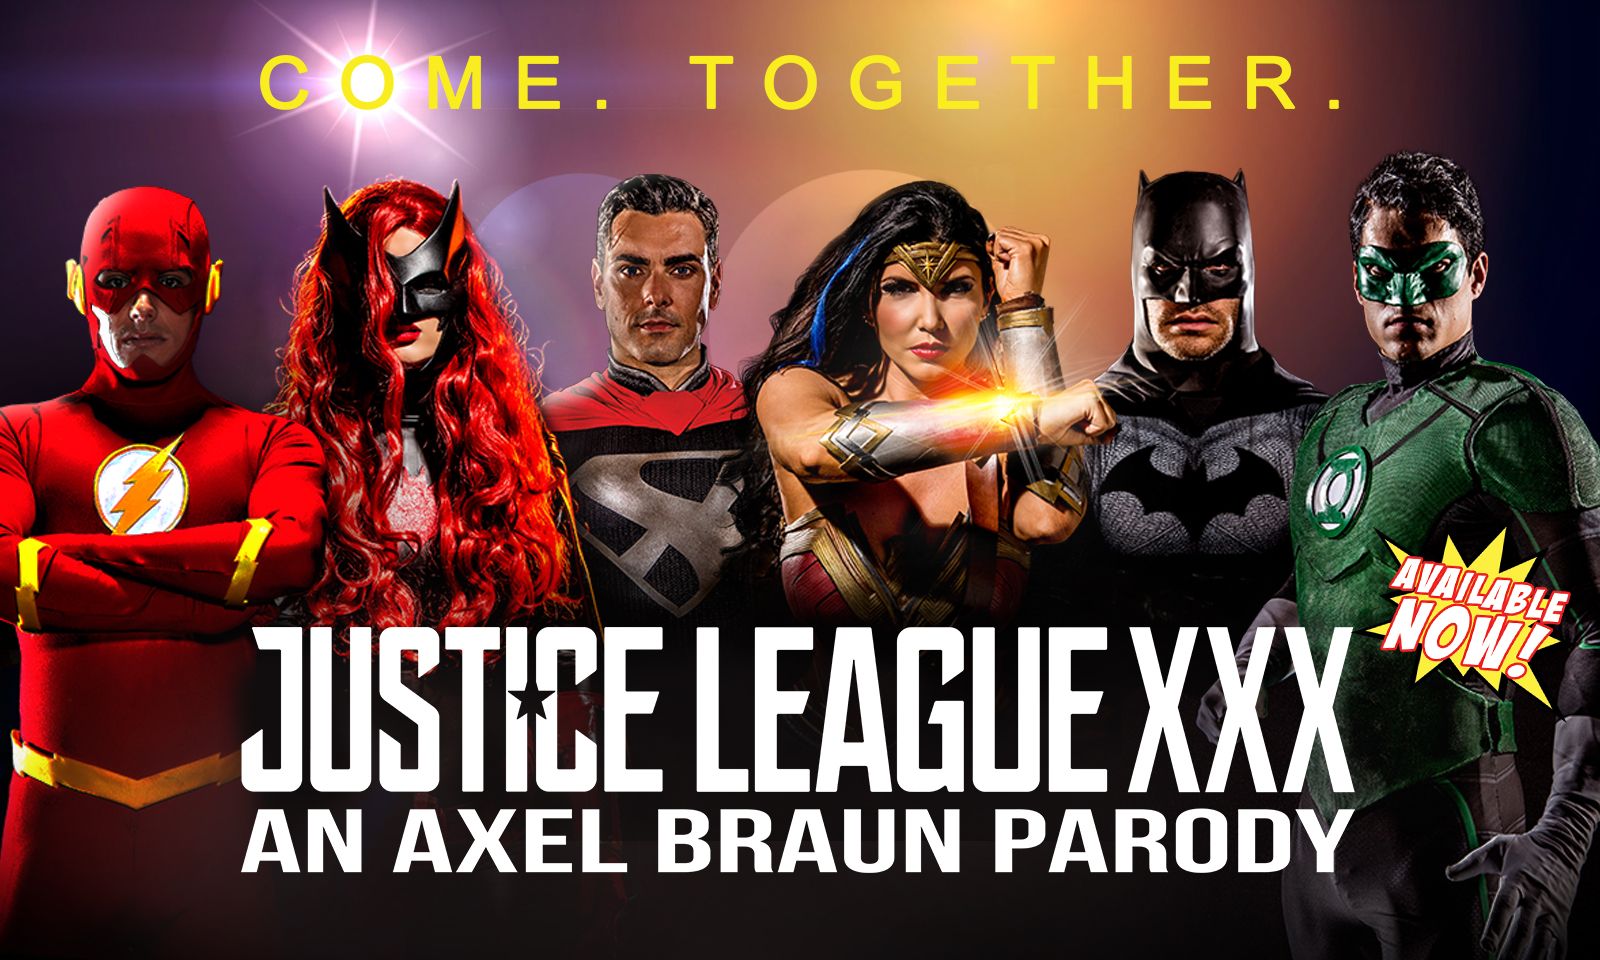 Justice league xxx: an axel braun parody